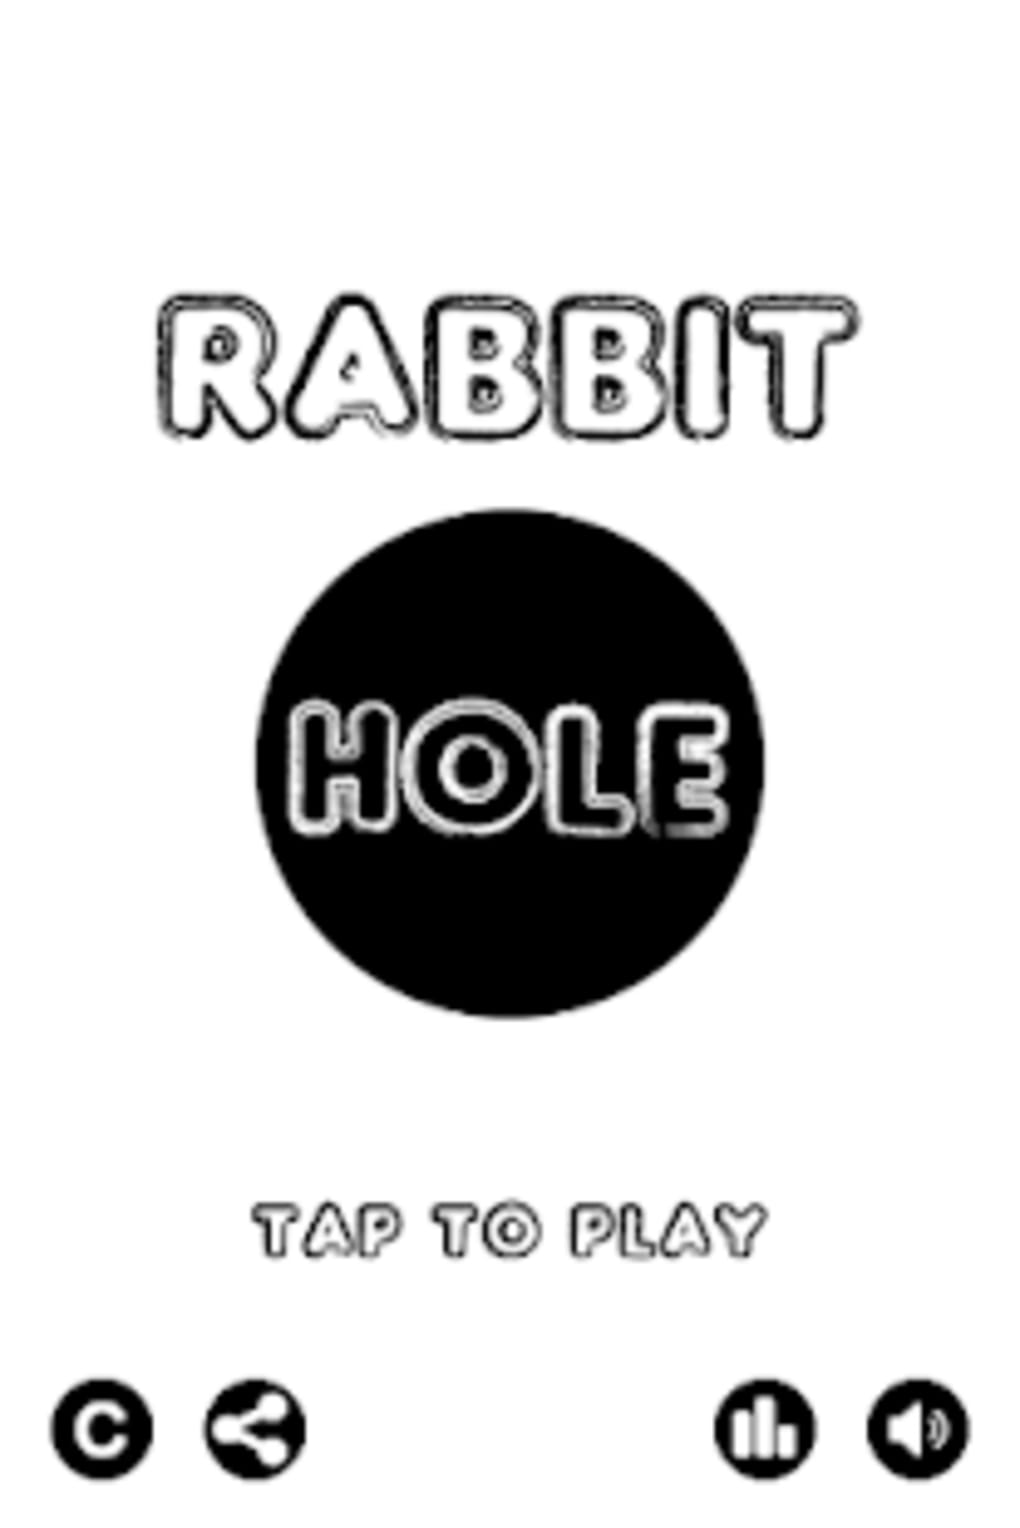 Rabbit hole download. Rabbit hole. Rabbit hole Постер. Rabbit hole карты к видео ютуб. Rabbit hole песня.